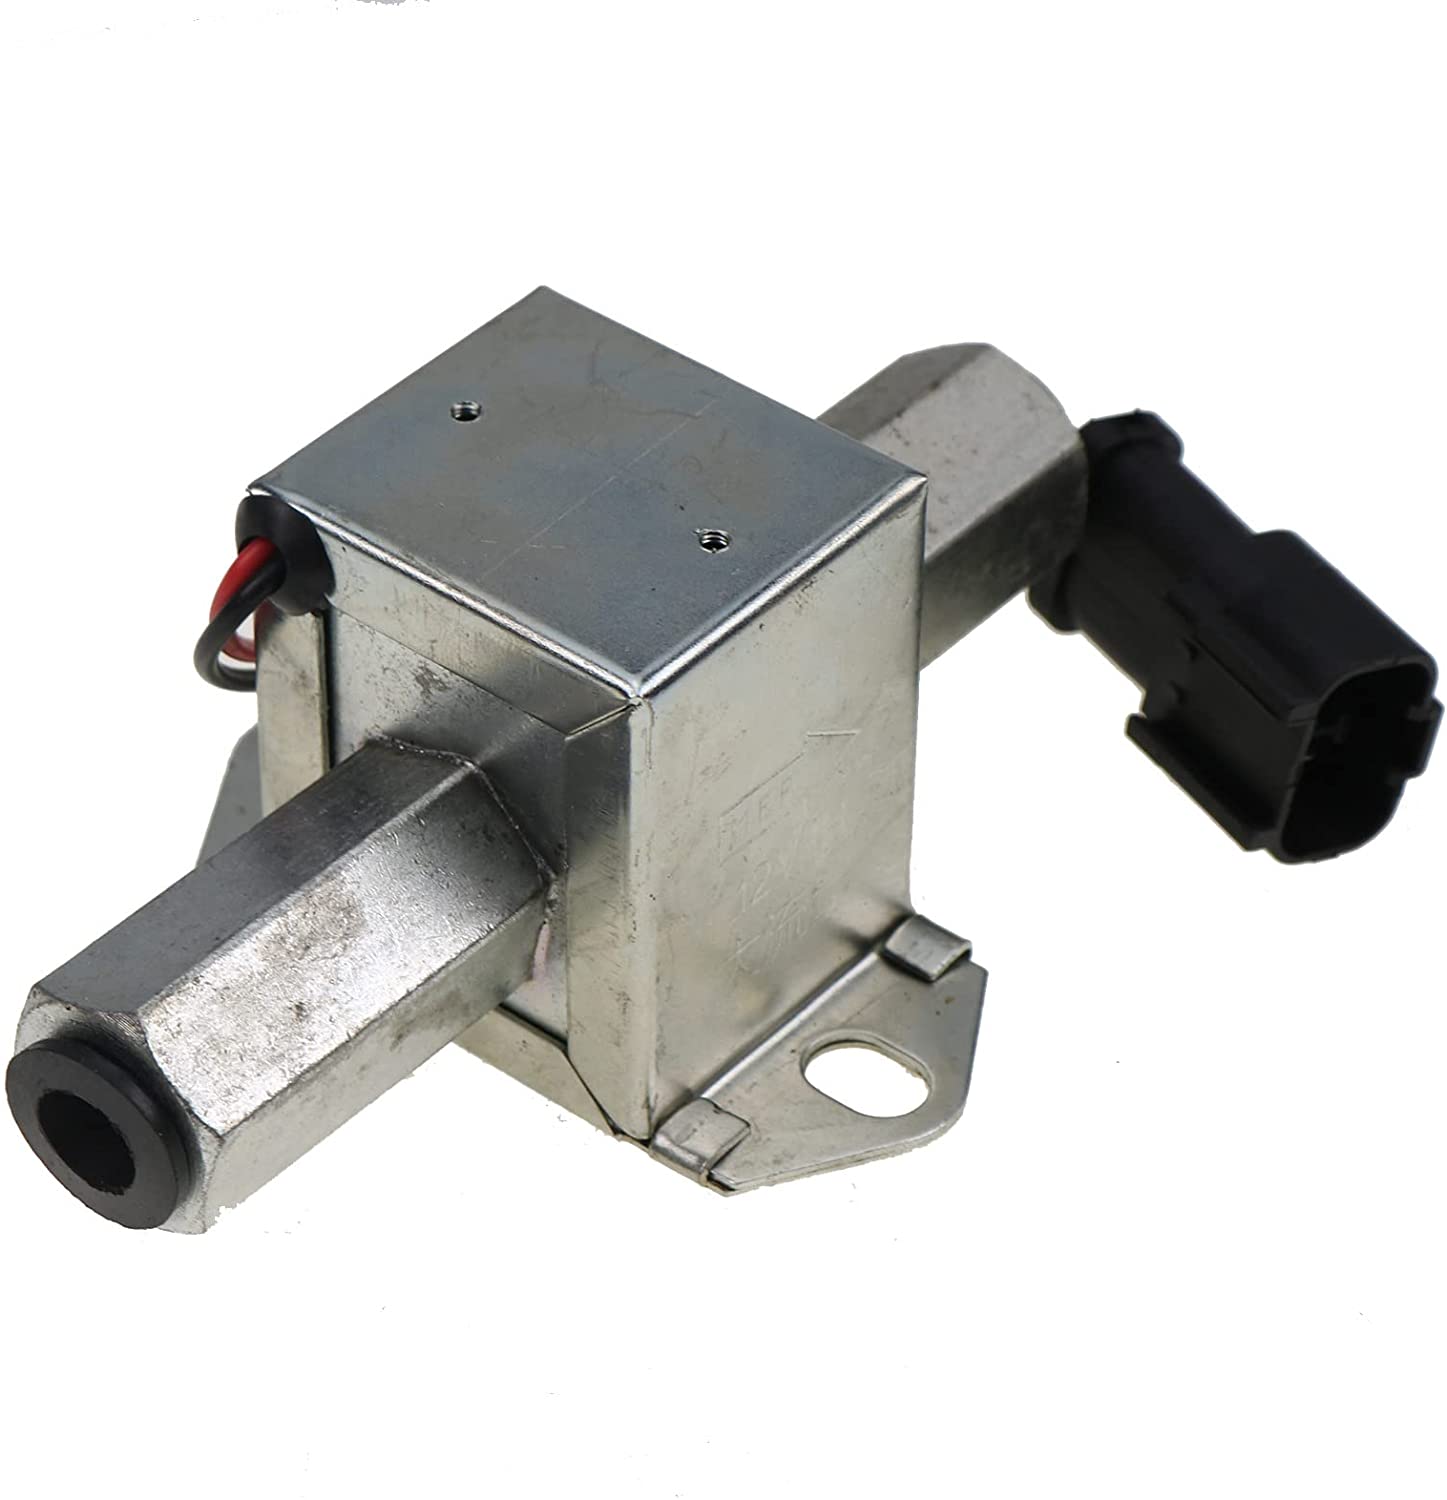 12V Electric Fuel Pump compatible with Arrowhead FPF-40277N JCB 334S6488 Kohler GM90305-1 NAPA 610-2000 Caterpillar 345-3520 416-5886 236D 242D 246D 262D 272D 257D - KUDUPARTS